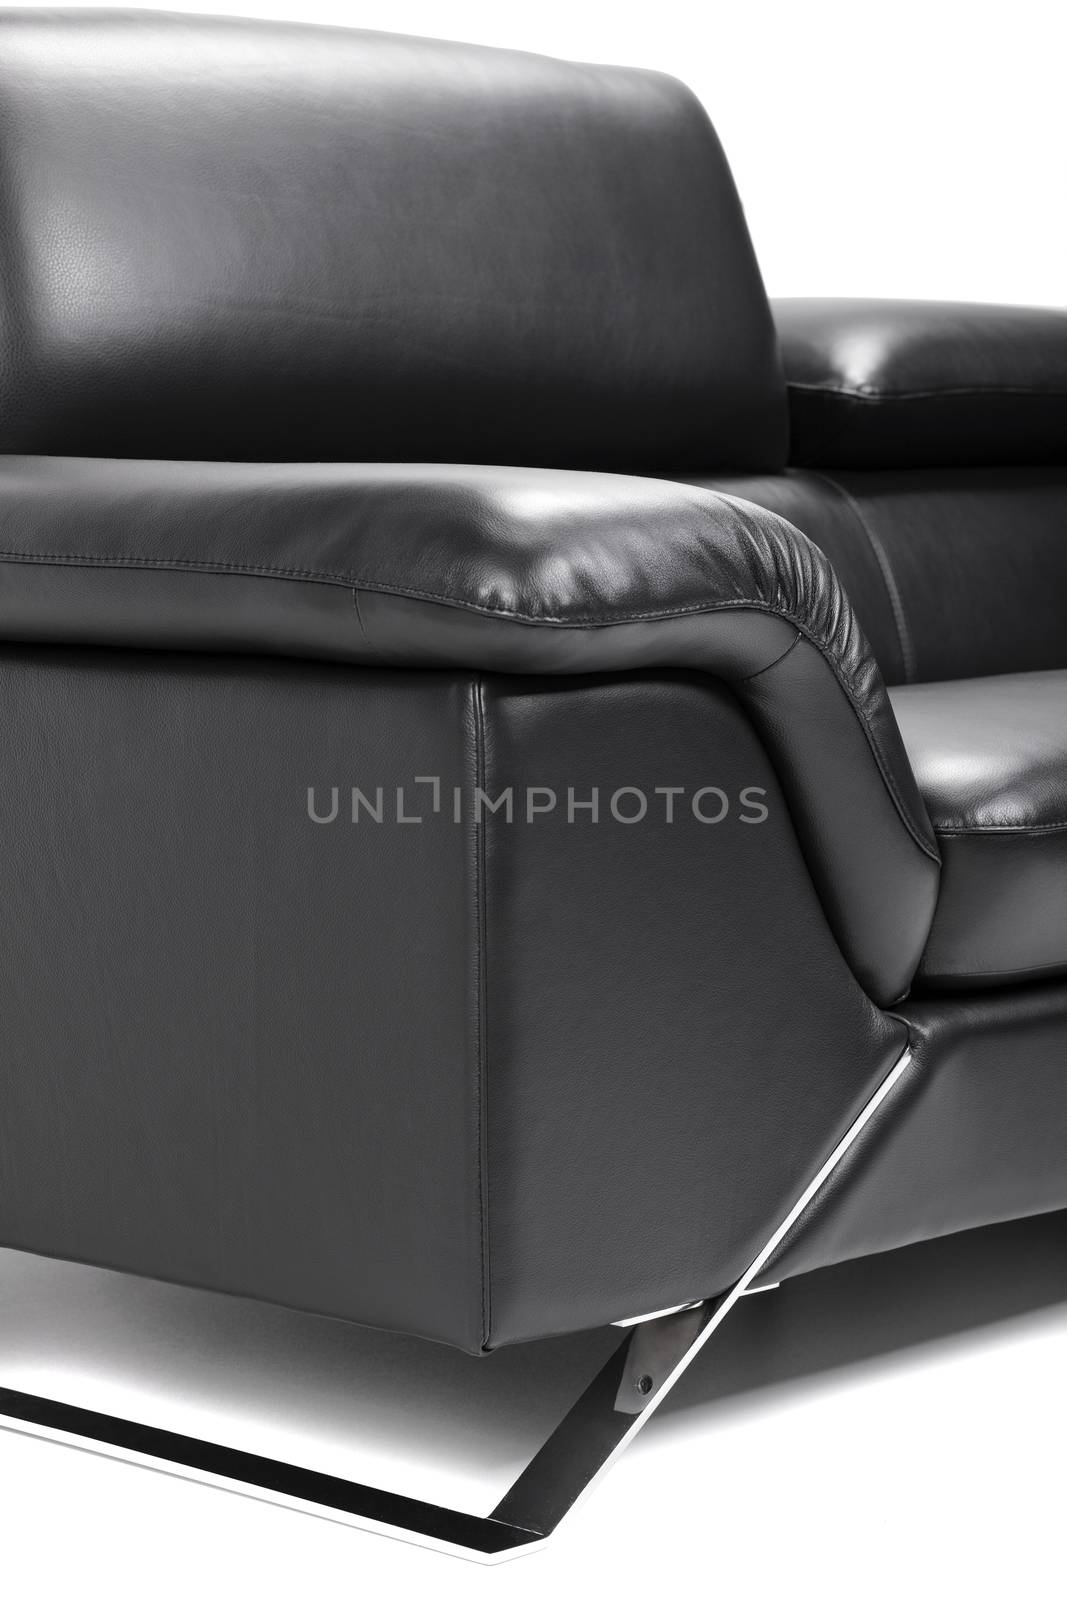 black leather sofa by kokimk